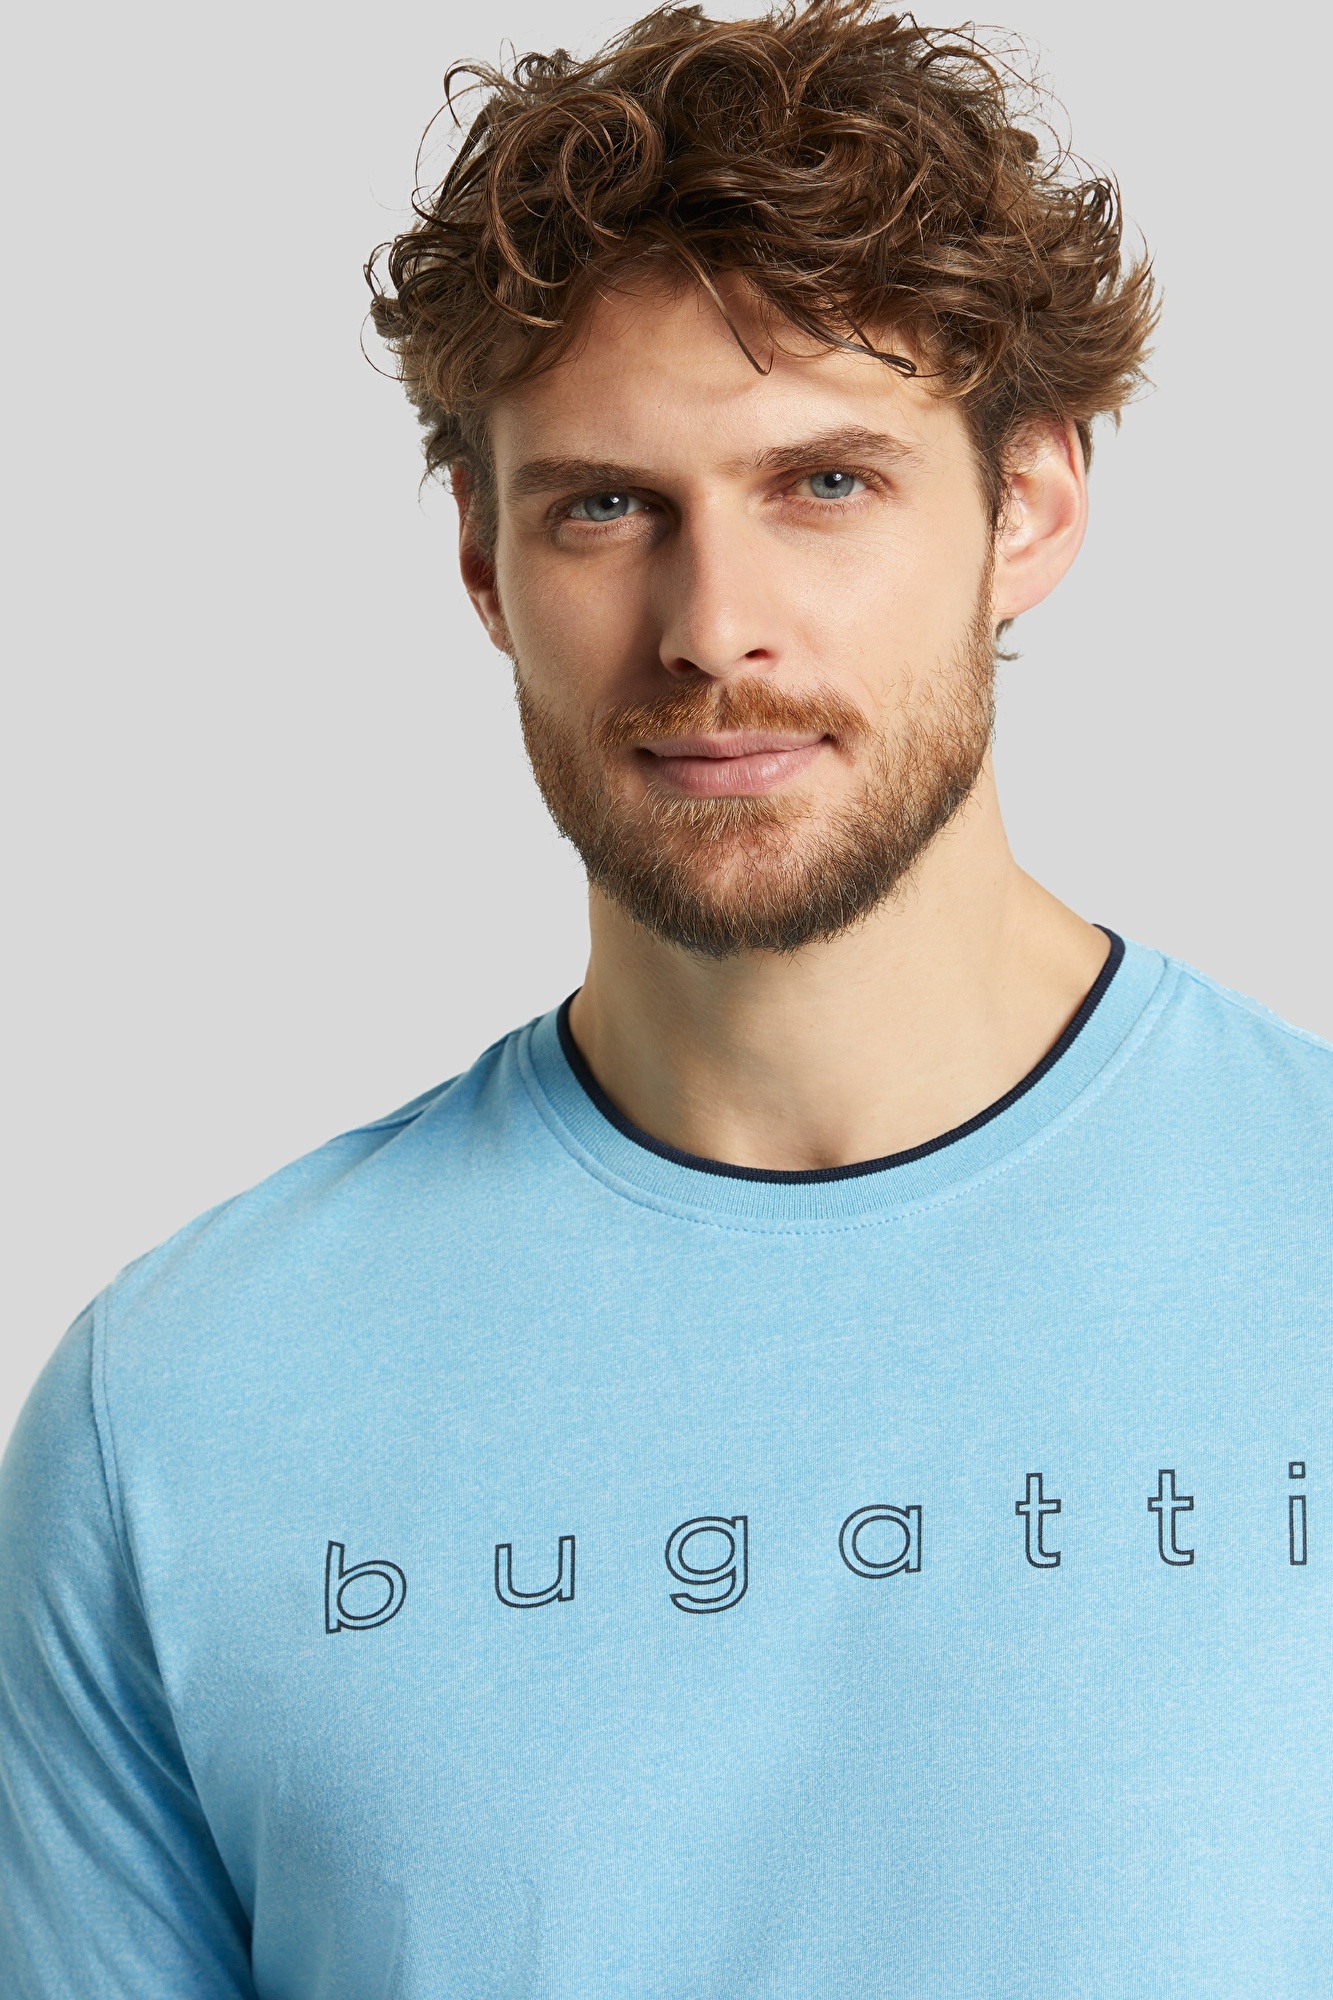 T-Shirt mit großem bugatti Logo-Print in blau | bugatti | 